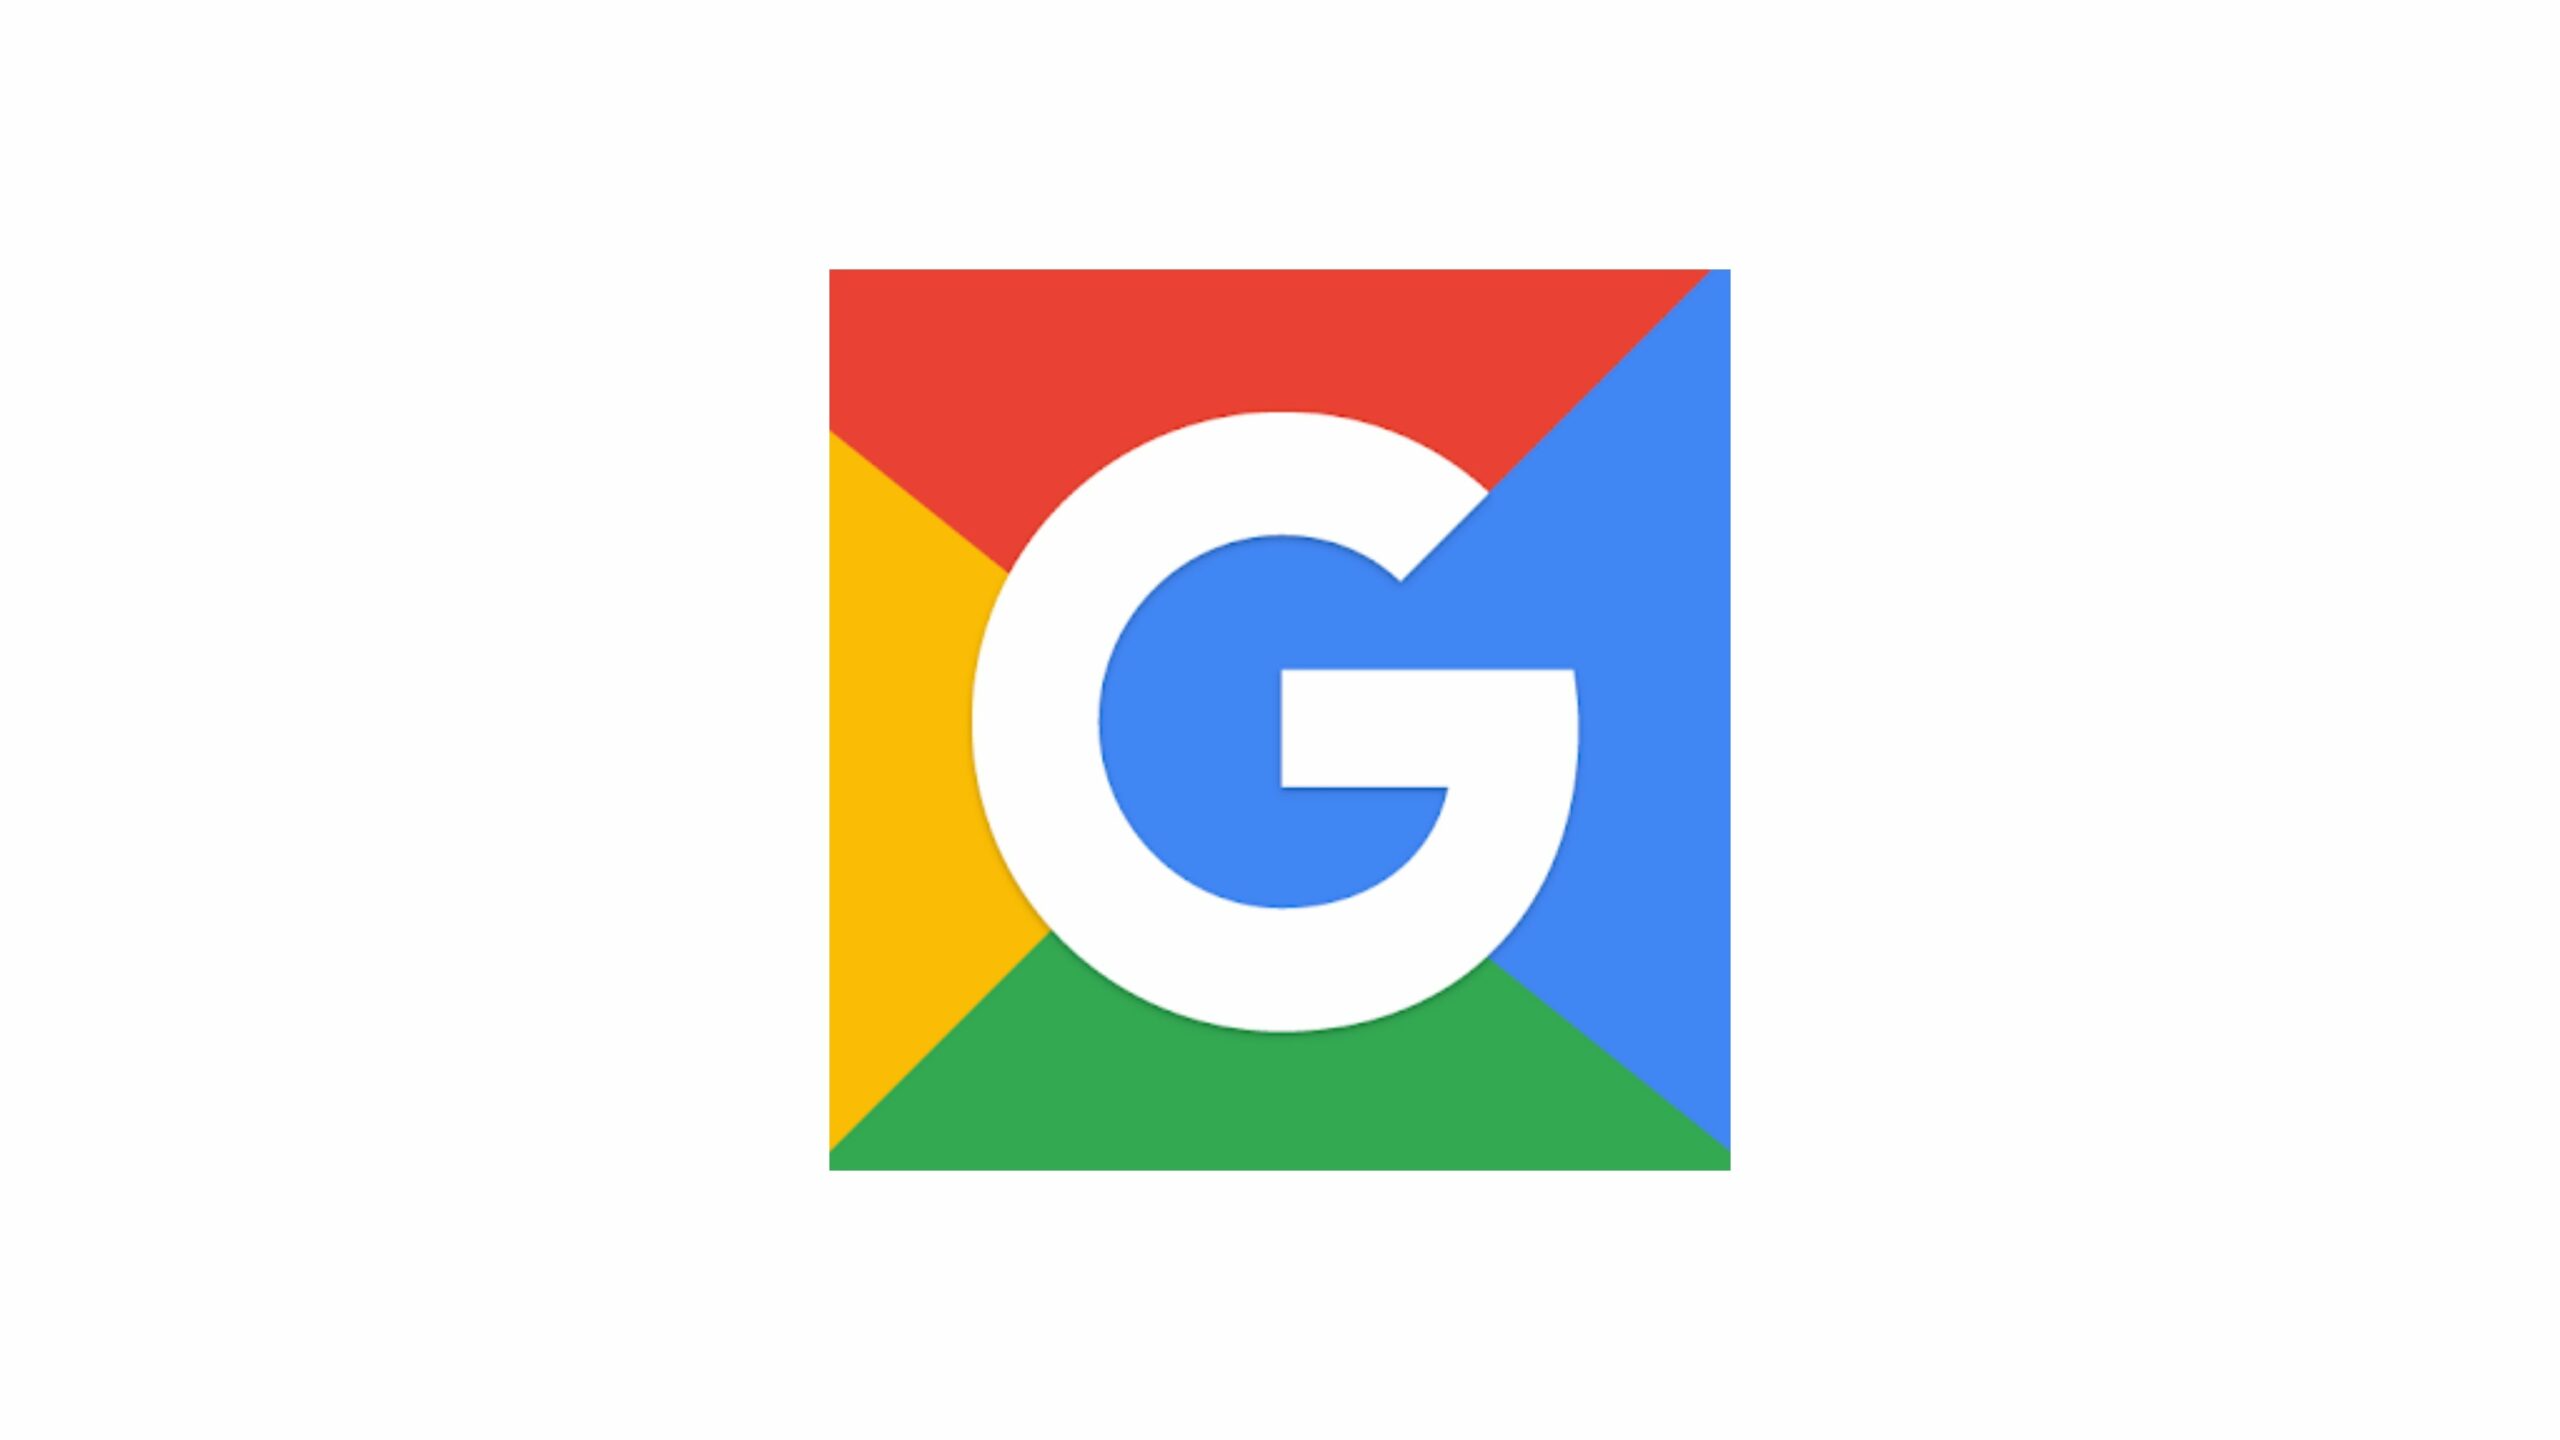 Predstavljen logotip aplikacije Google Go